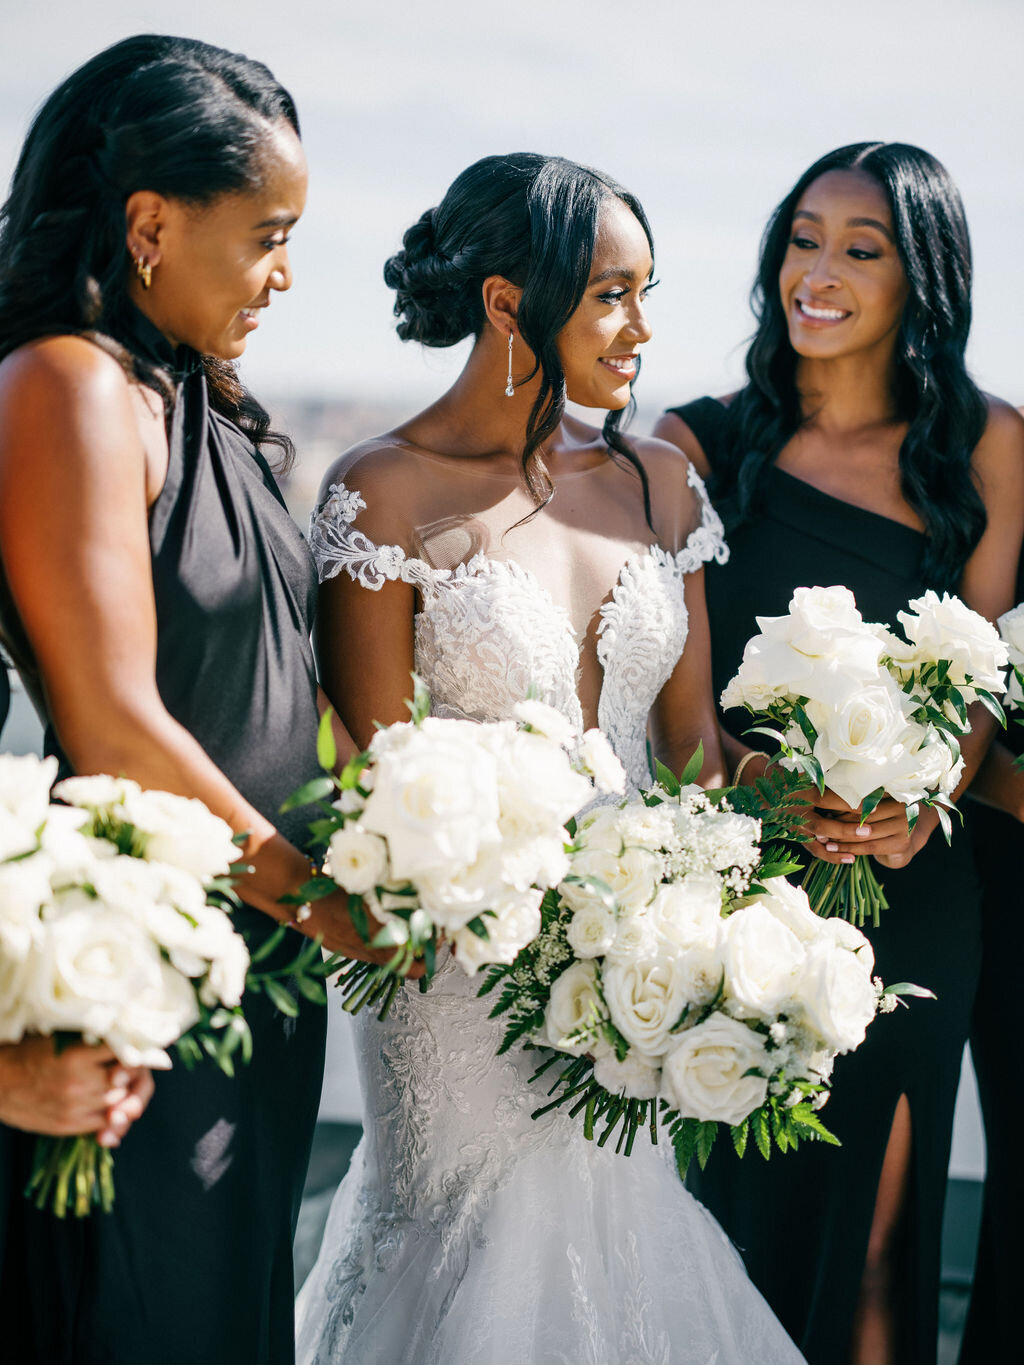 Jayne Heir Weddings and Events - Washington DC Metropolitan Area Wedding and Event Planner - Modern, Stylish, Custom, Top, Best Photo - 17